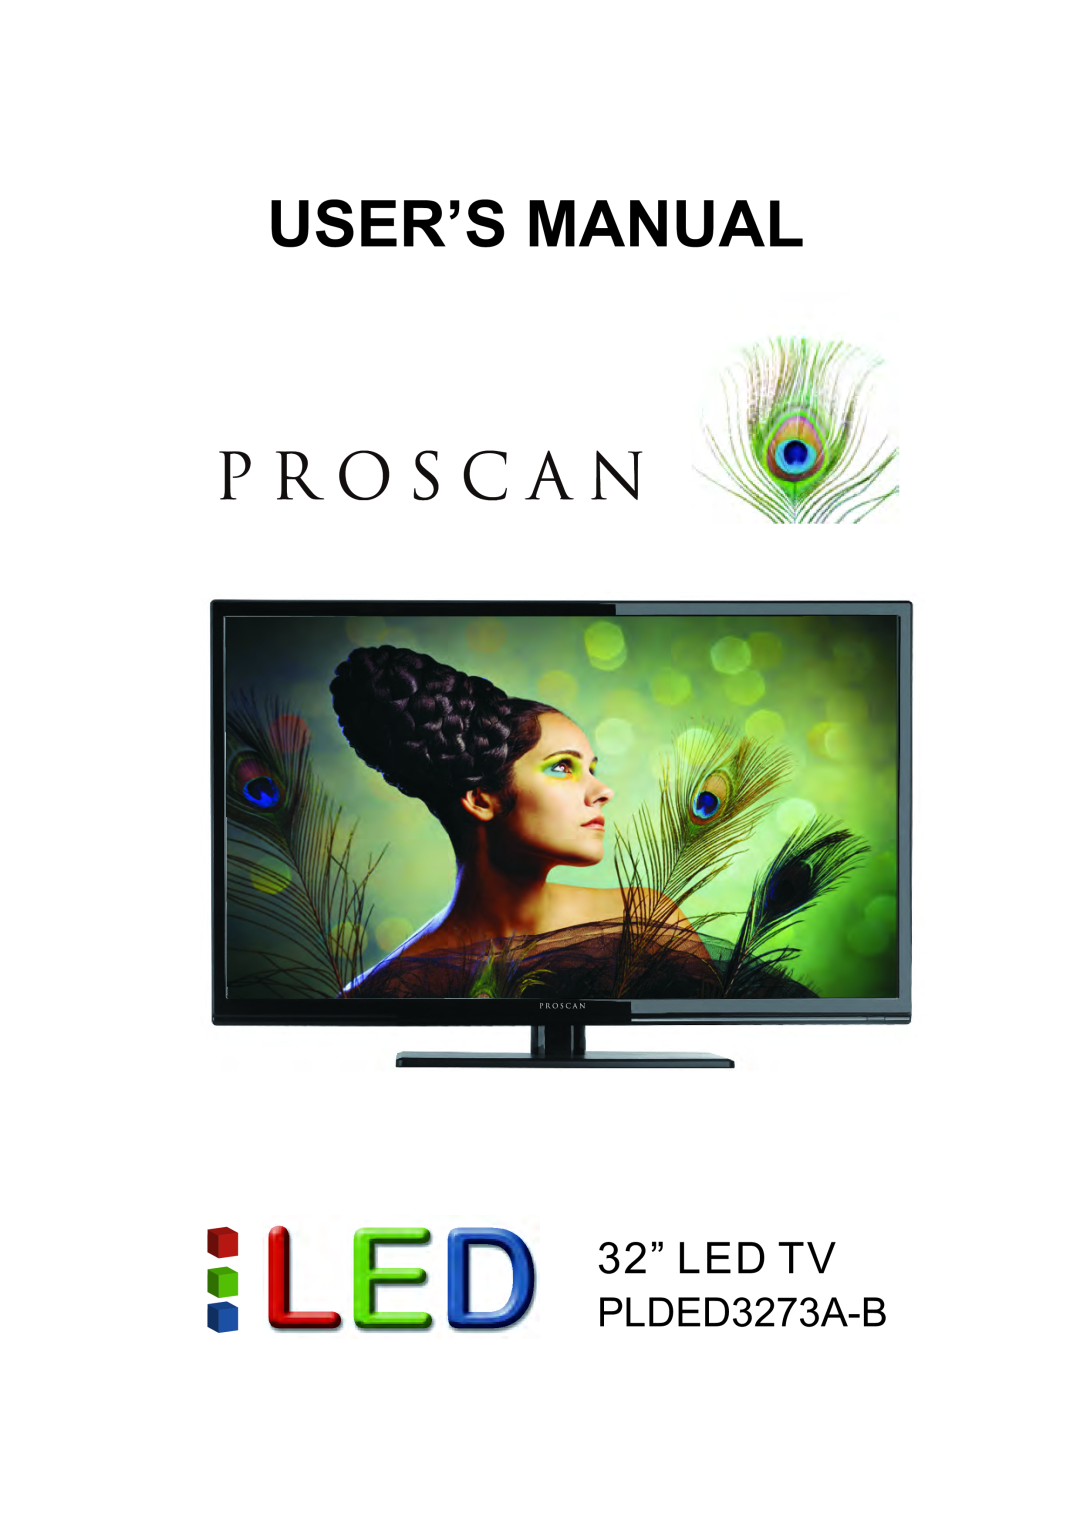 Sears PLDED3273A-B user manual User’S Manual, 32” LED TV 